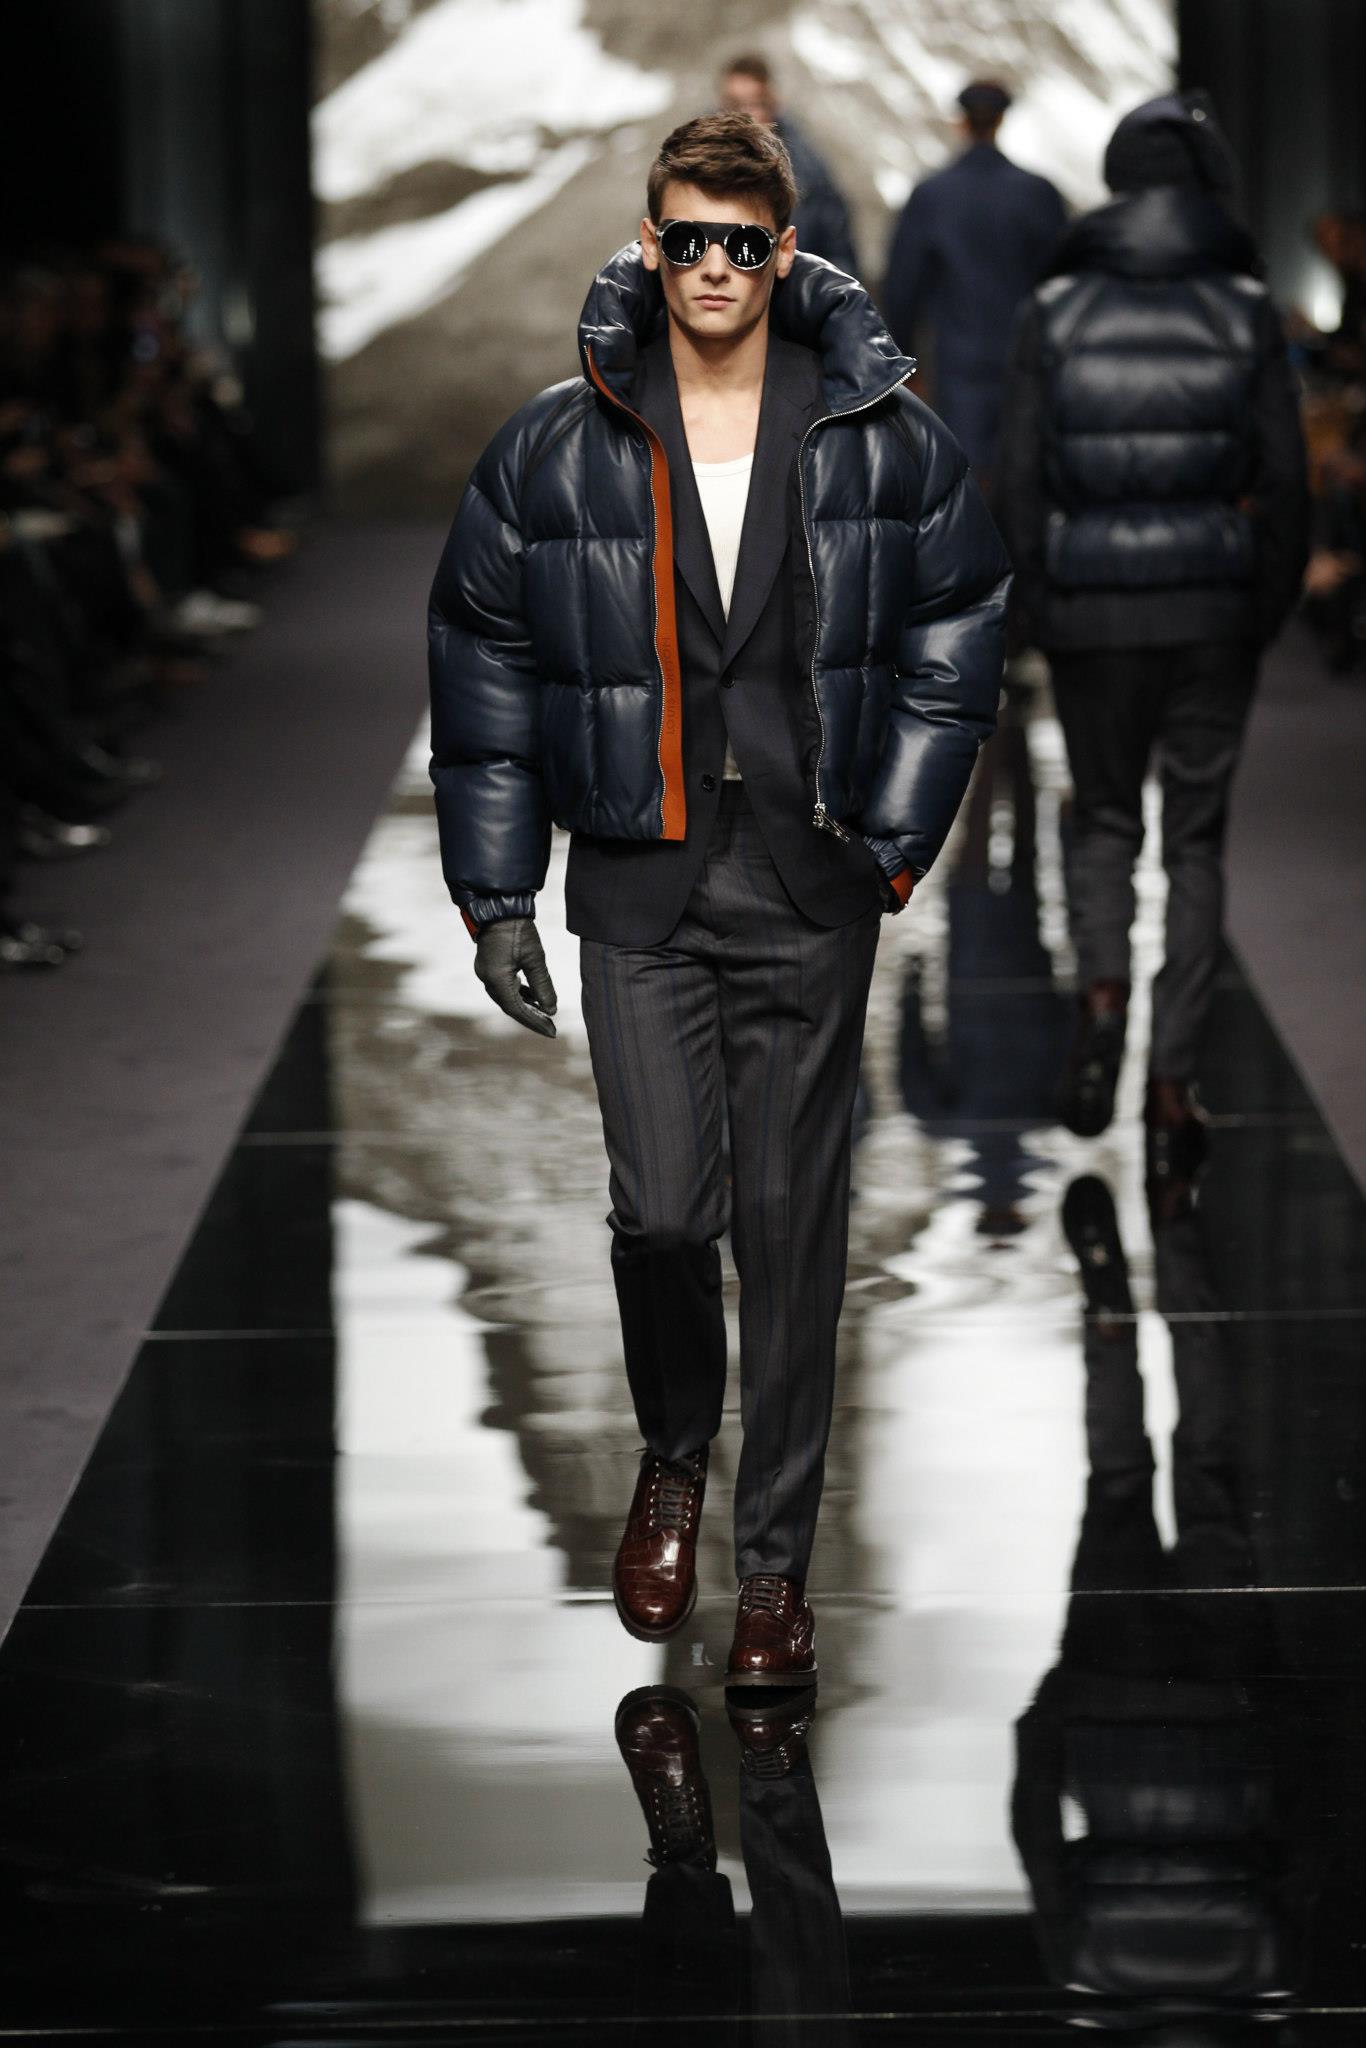 Louis Vuitton Fall 2012 Menswear Fashion Show Details #men'sleatherjacket  #men's #leather #jacket #runway